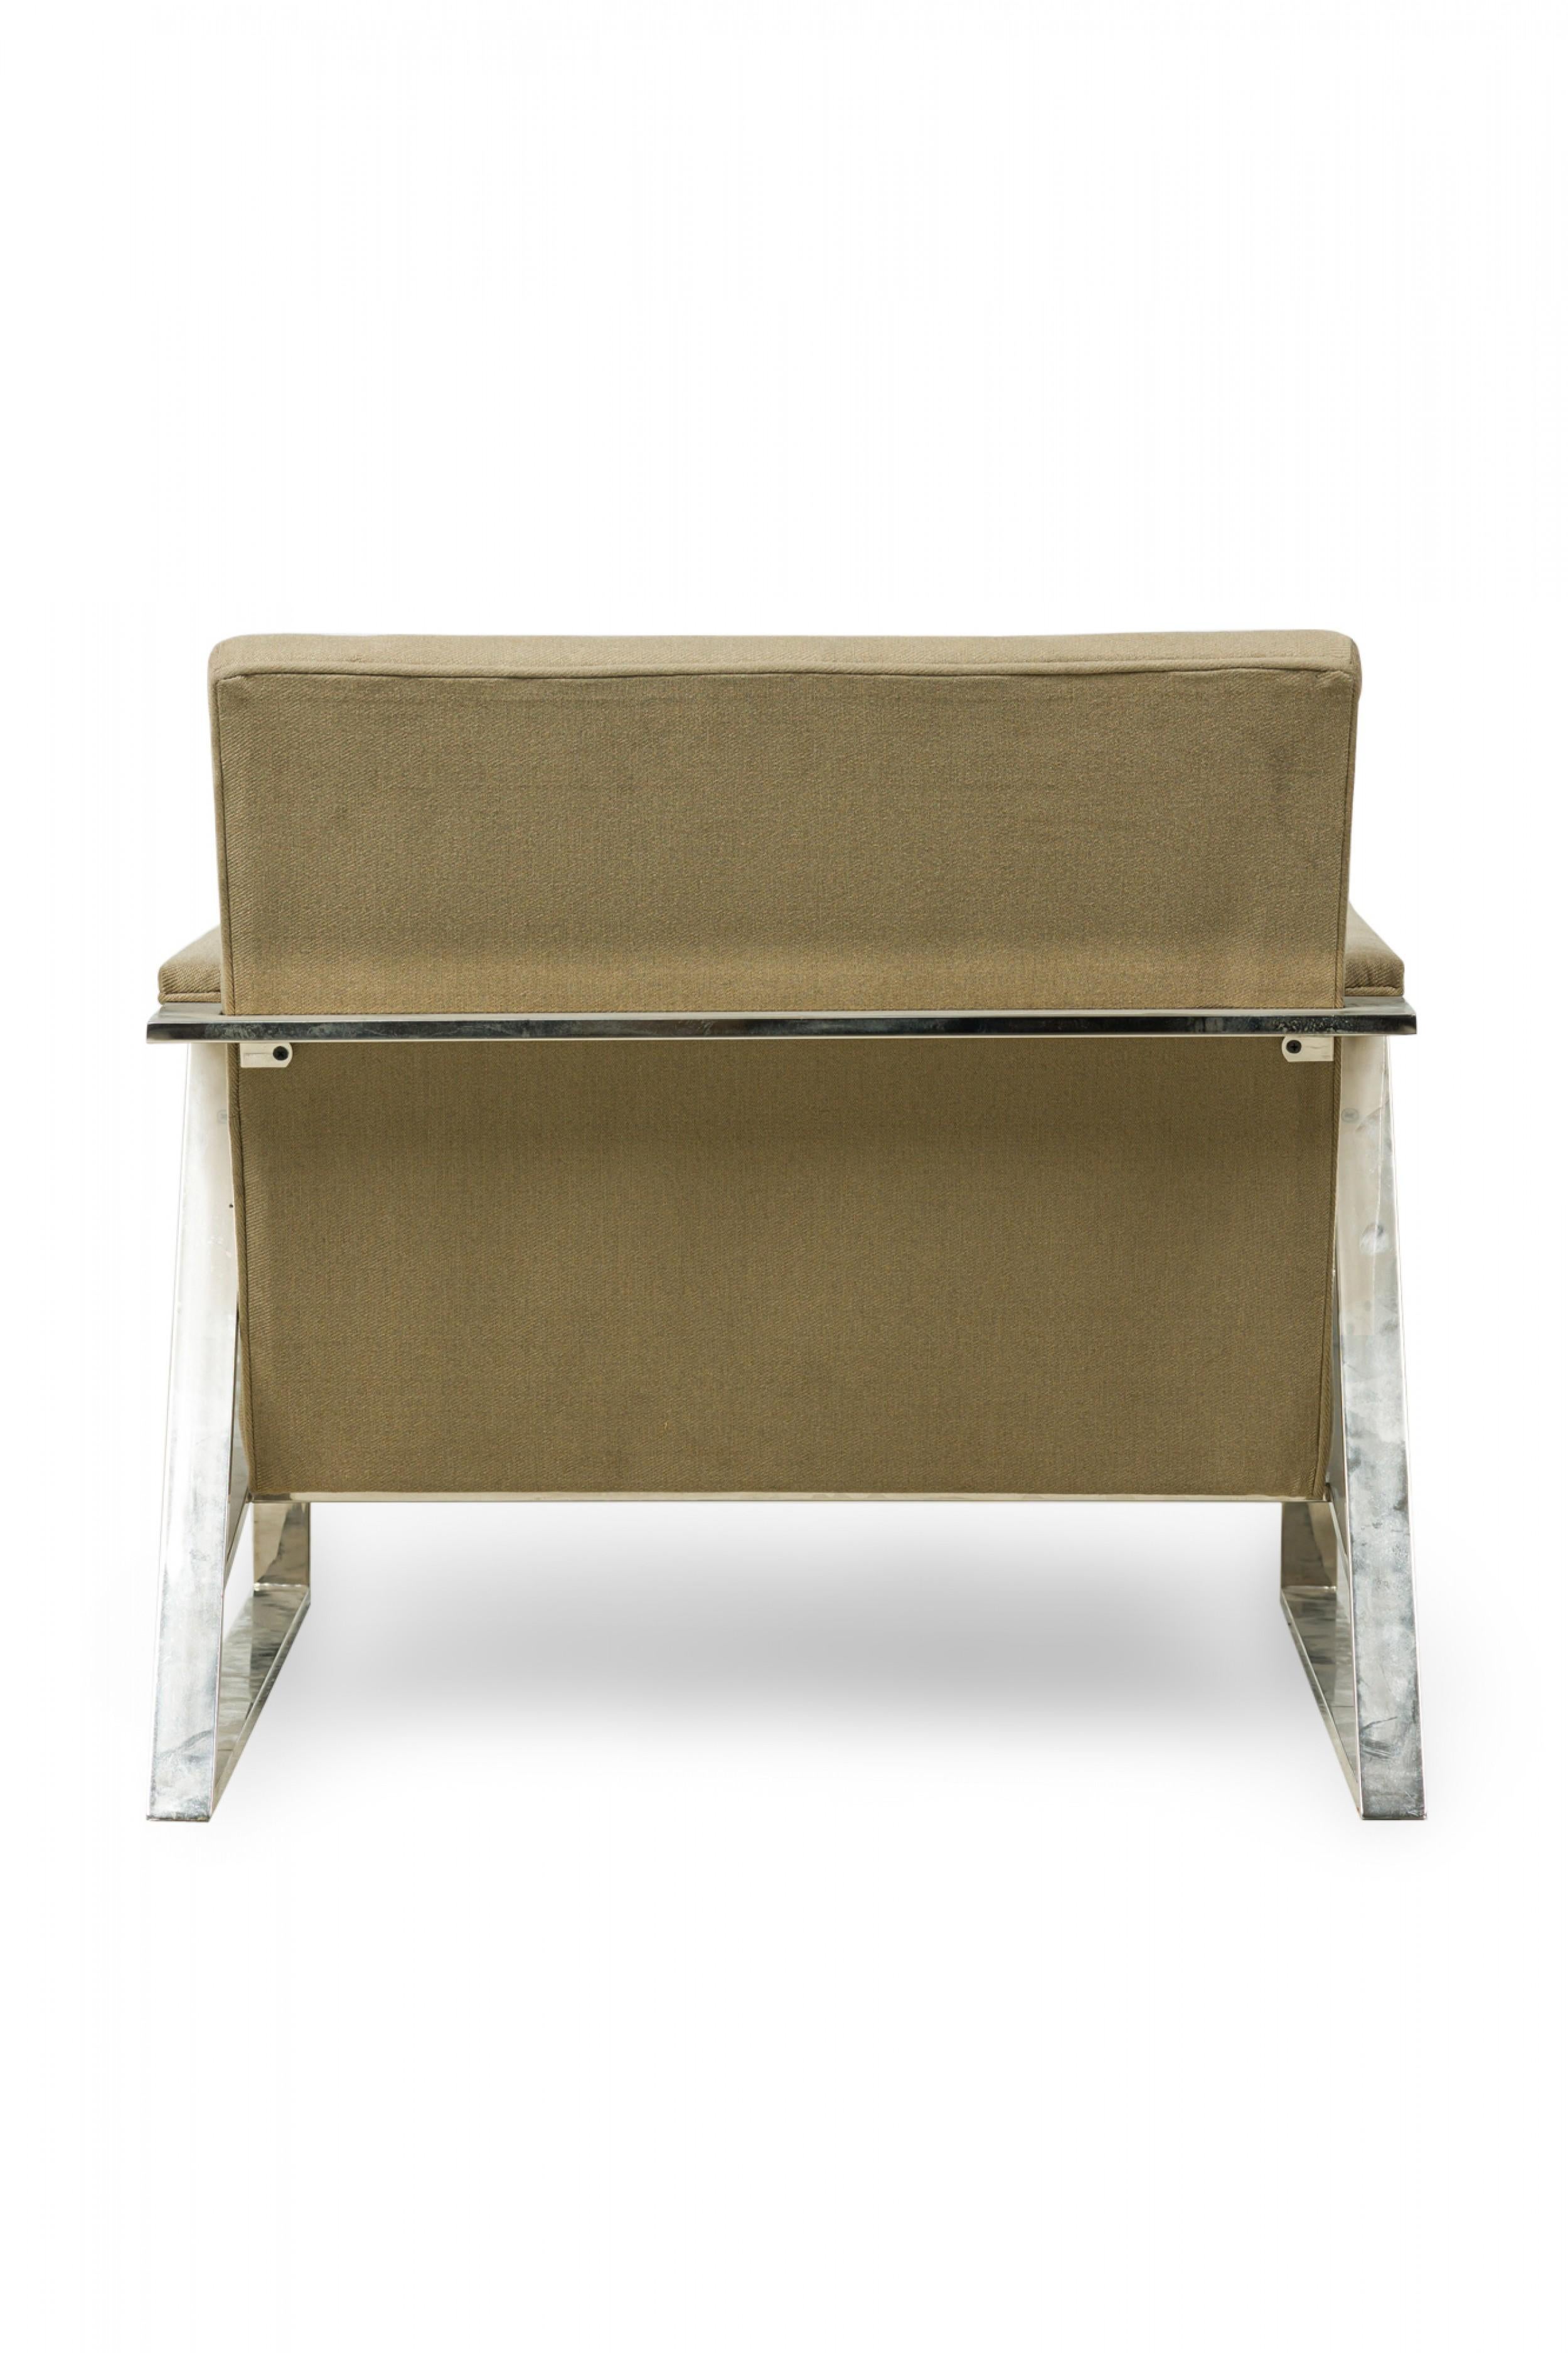 Milo Baughman American Beige Upholstered Flat Chrome Bar Lounge Armchair For Sale 2